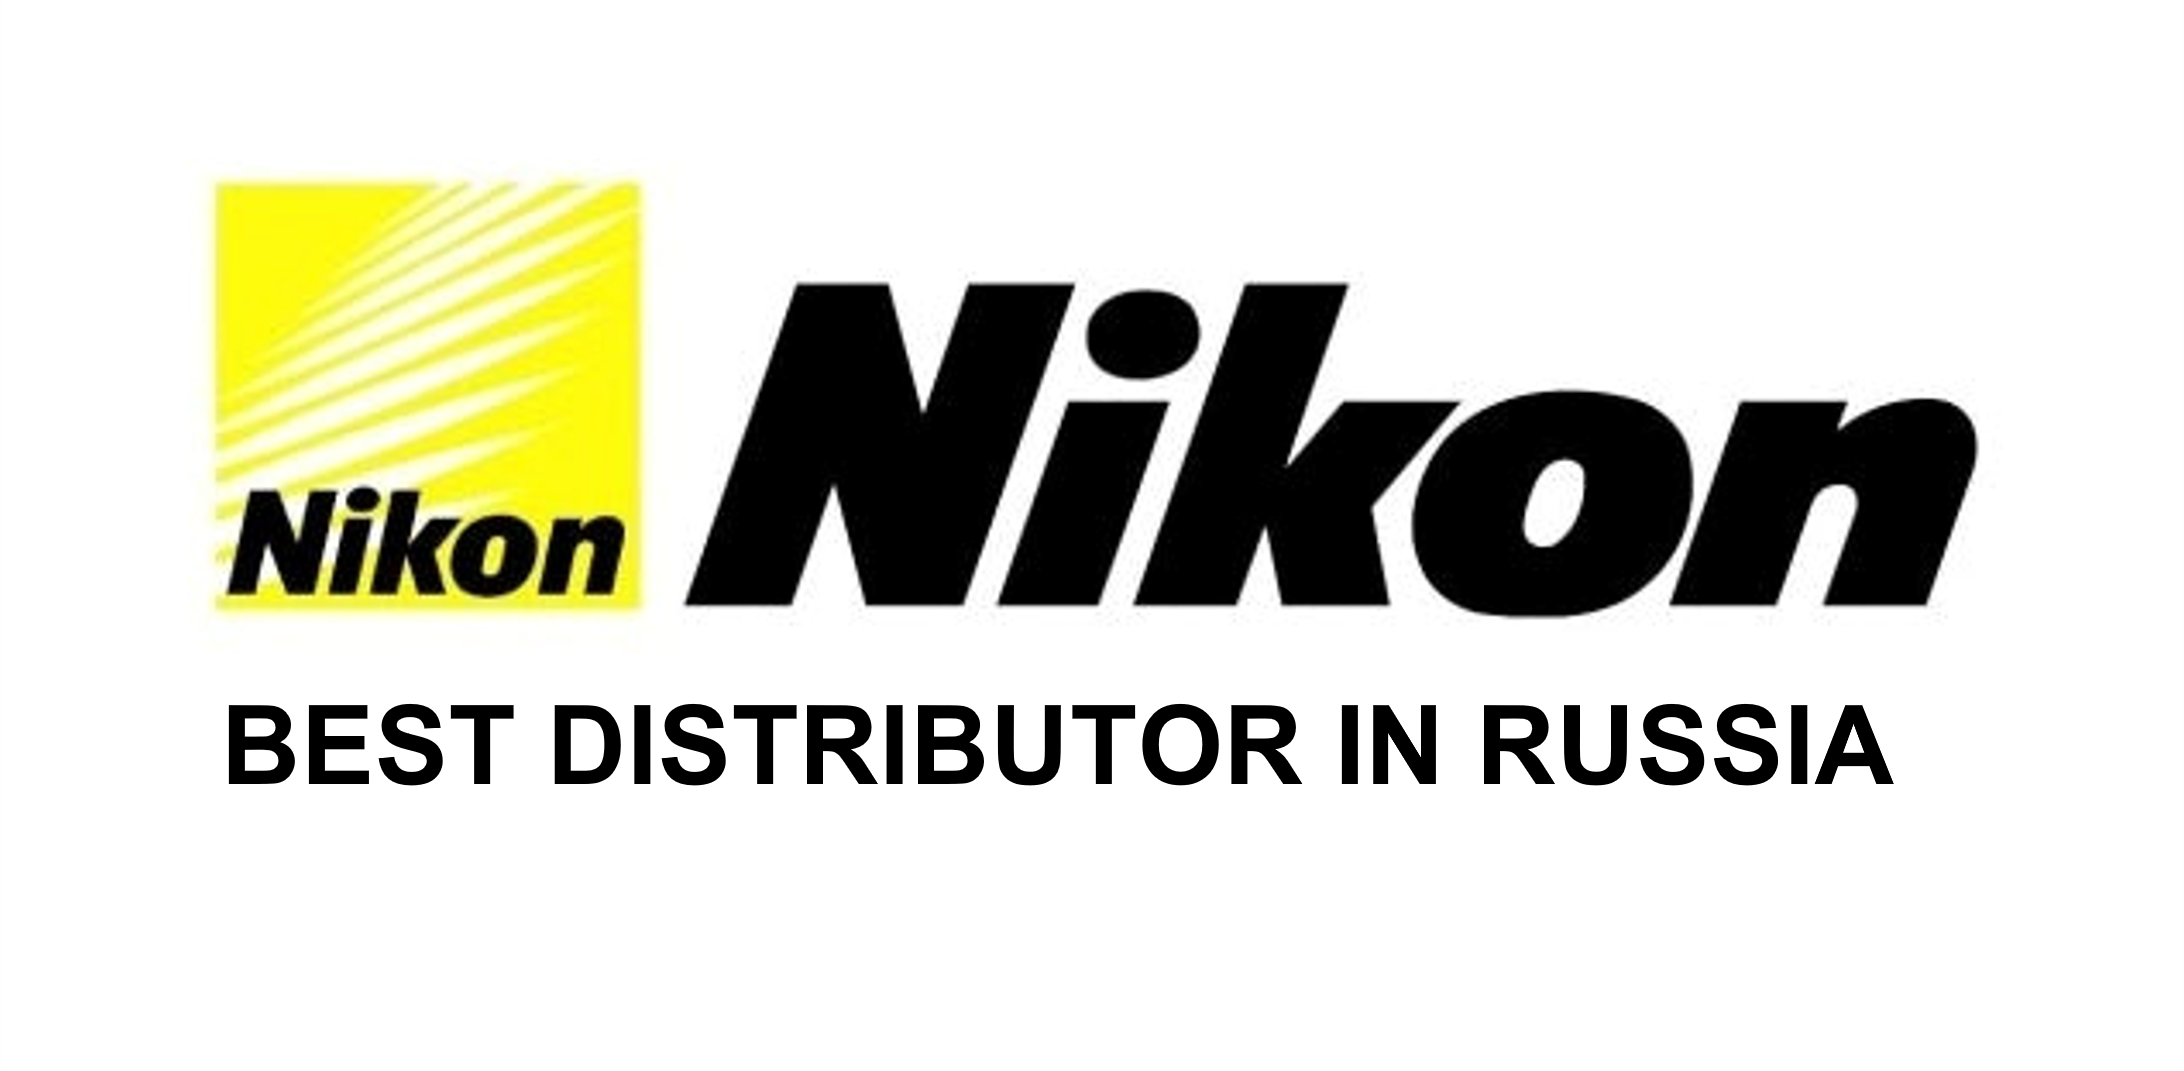 Best distributor in Russia by Nikon